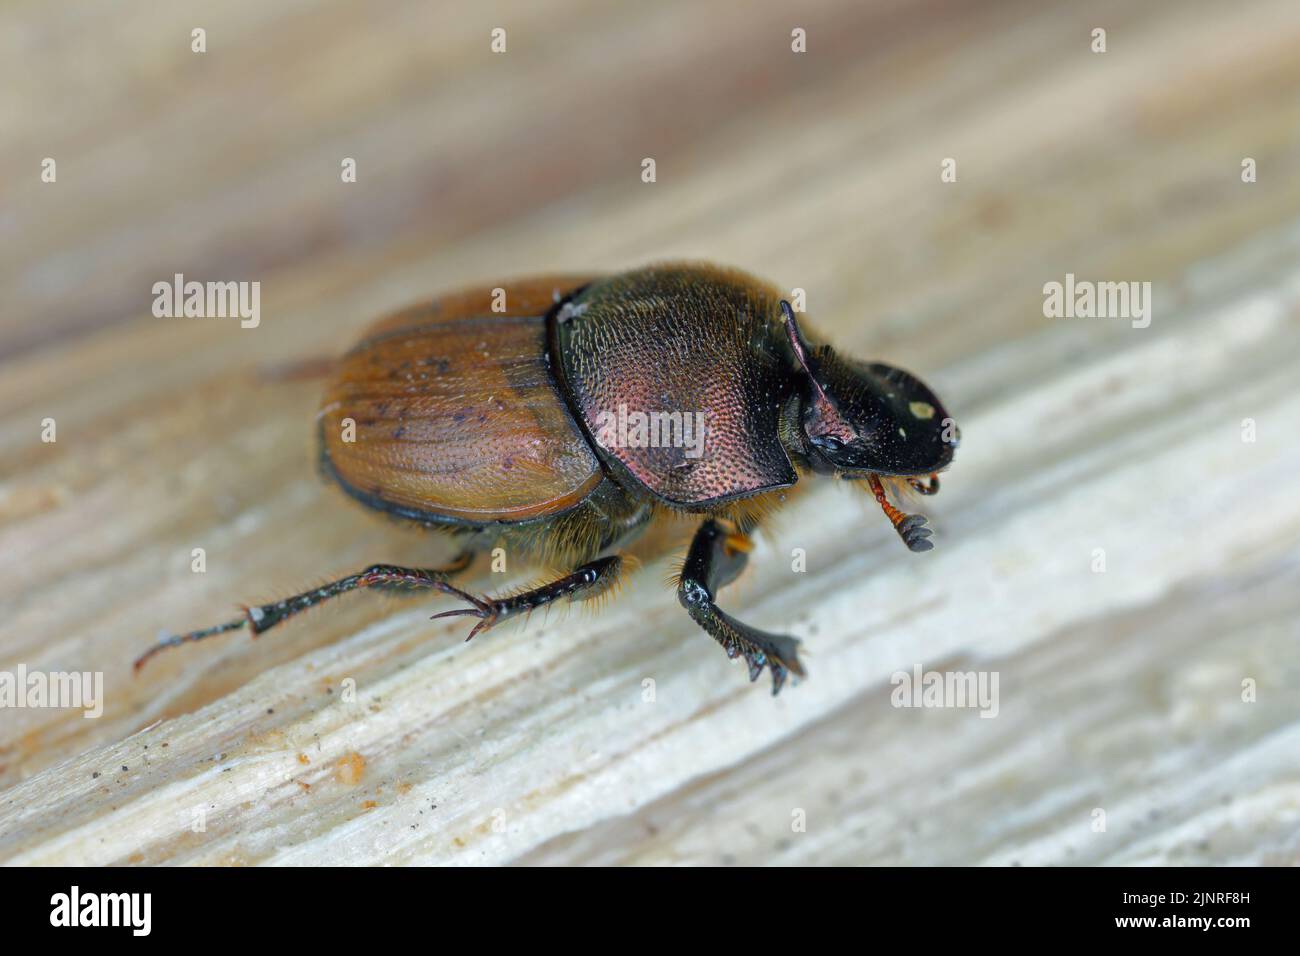 A shallow focus of a Dung beetle (Onthophagus coenobita). Stock Photo